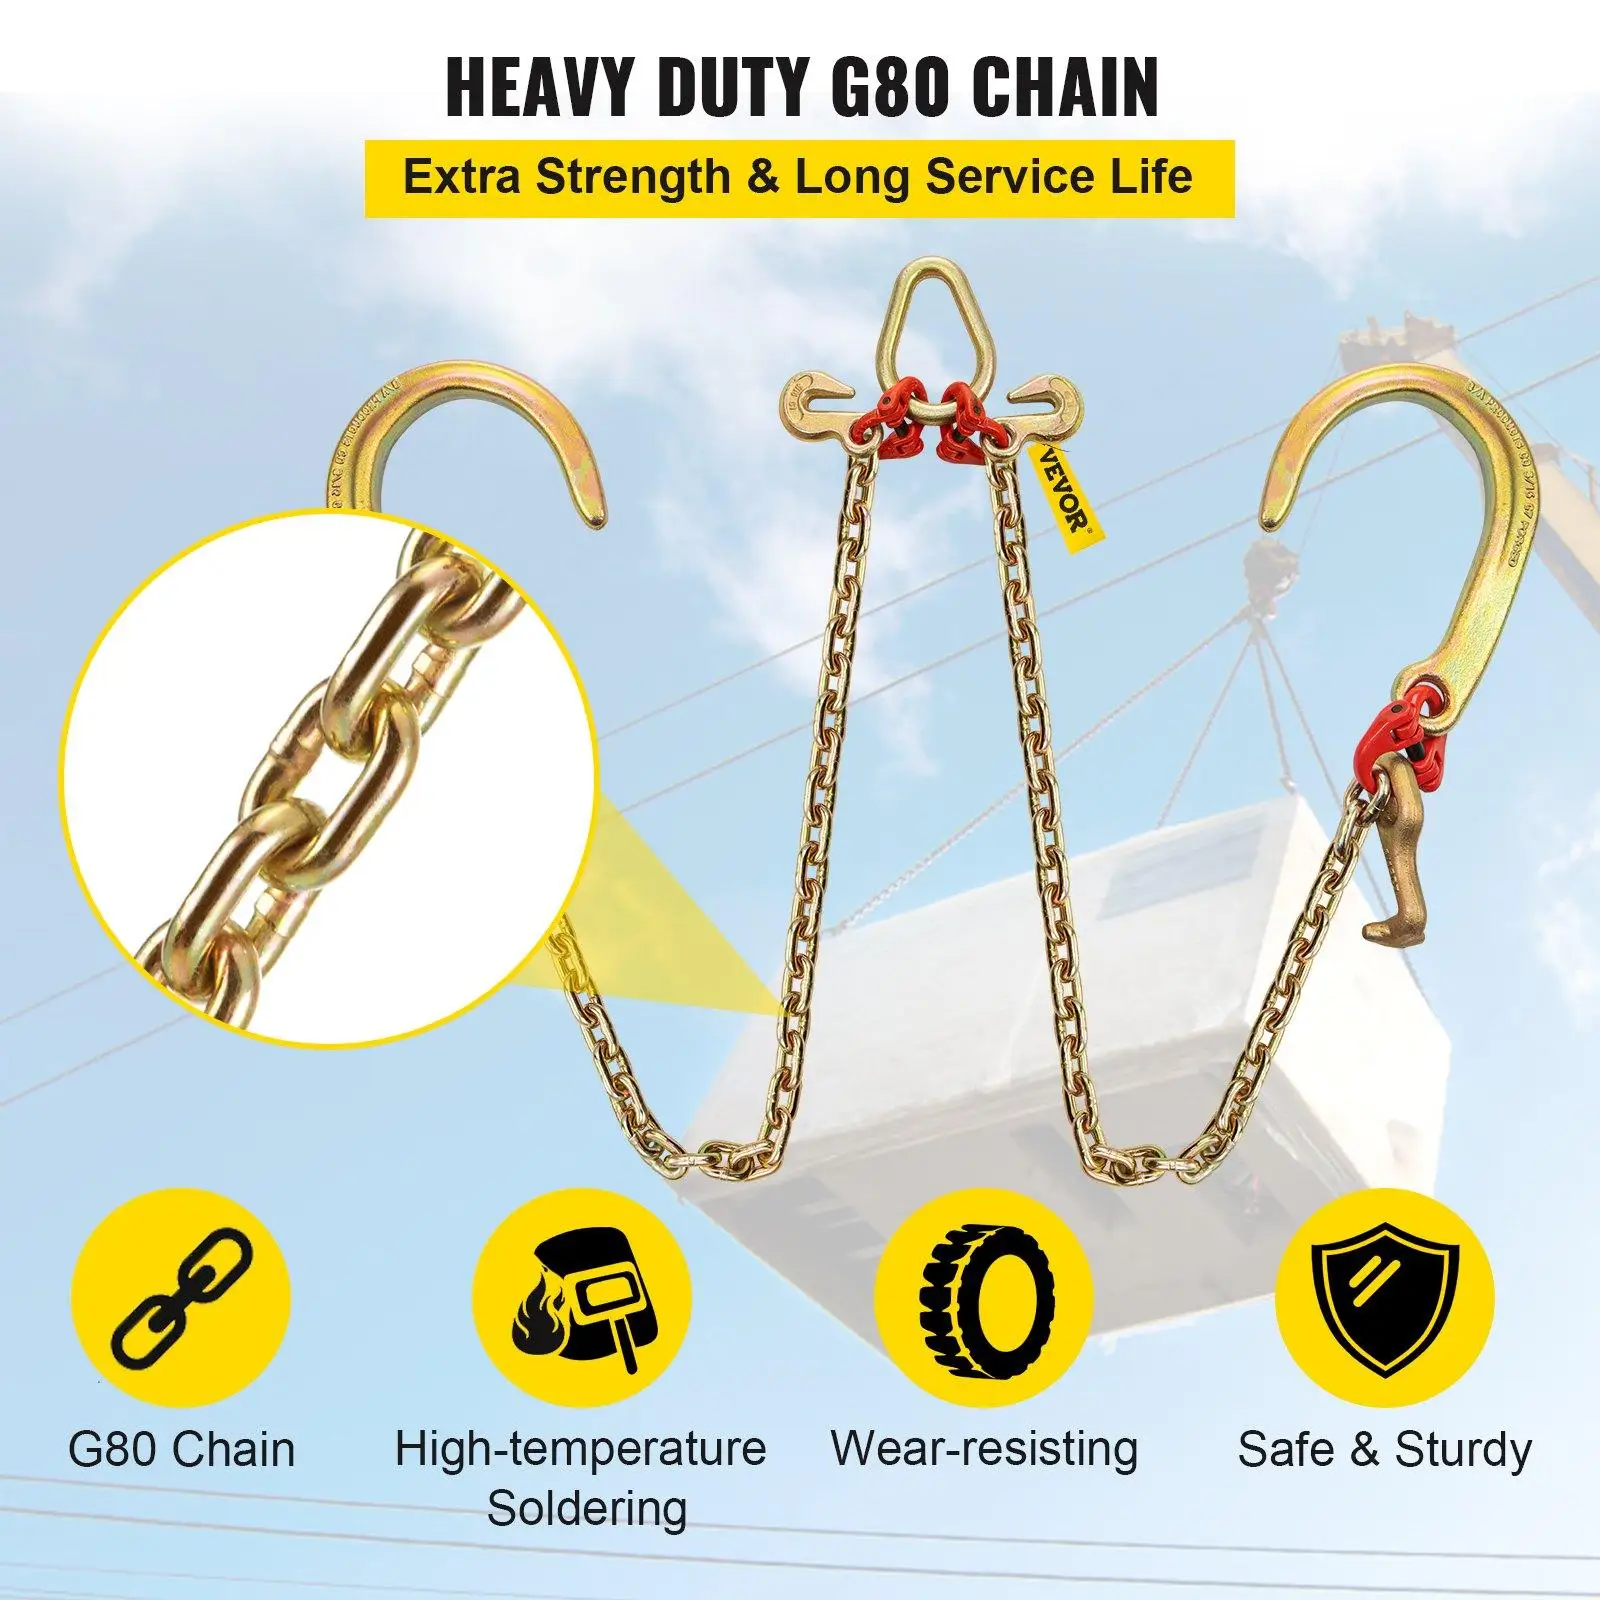 Heavy duty G80 chain